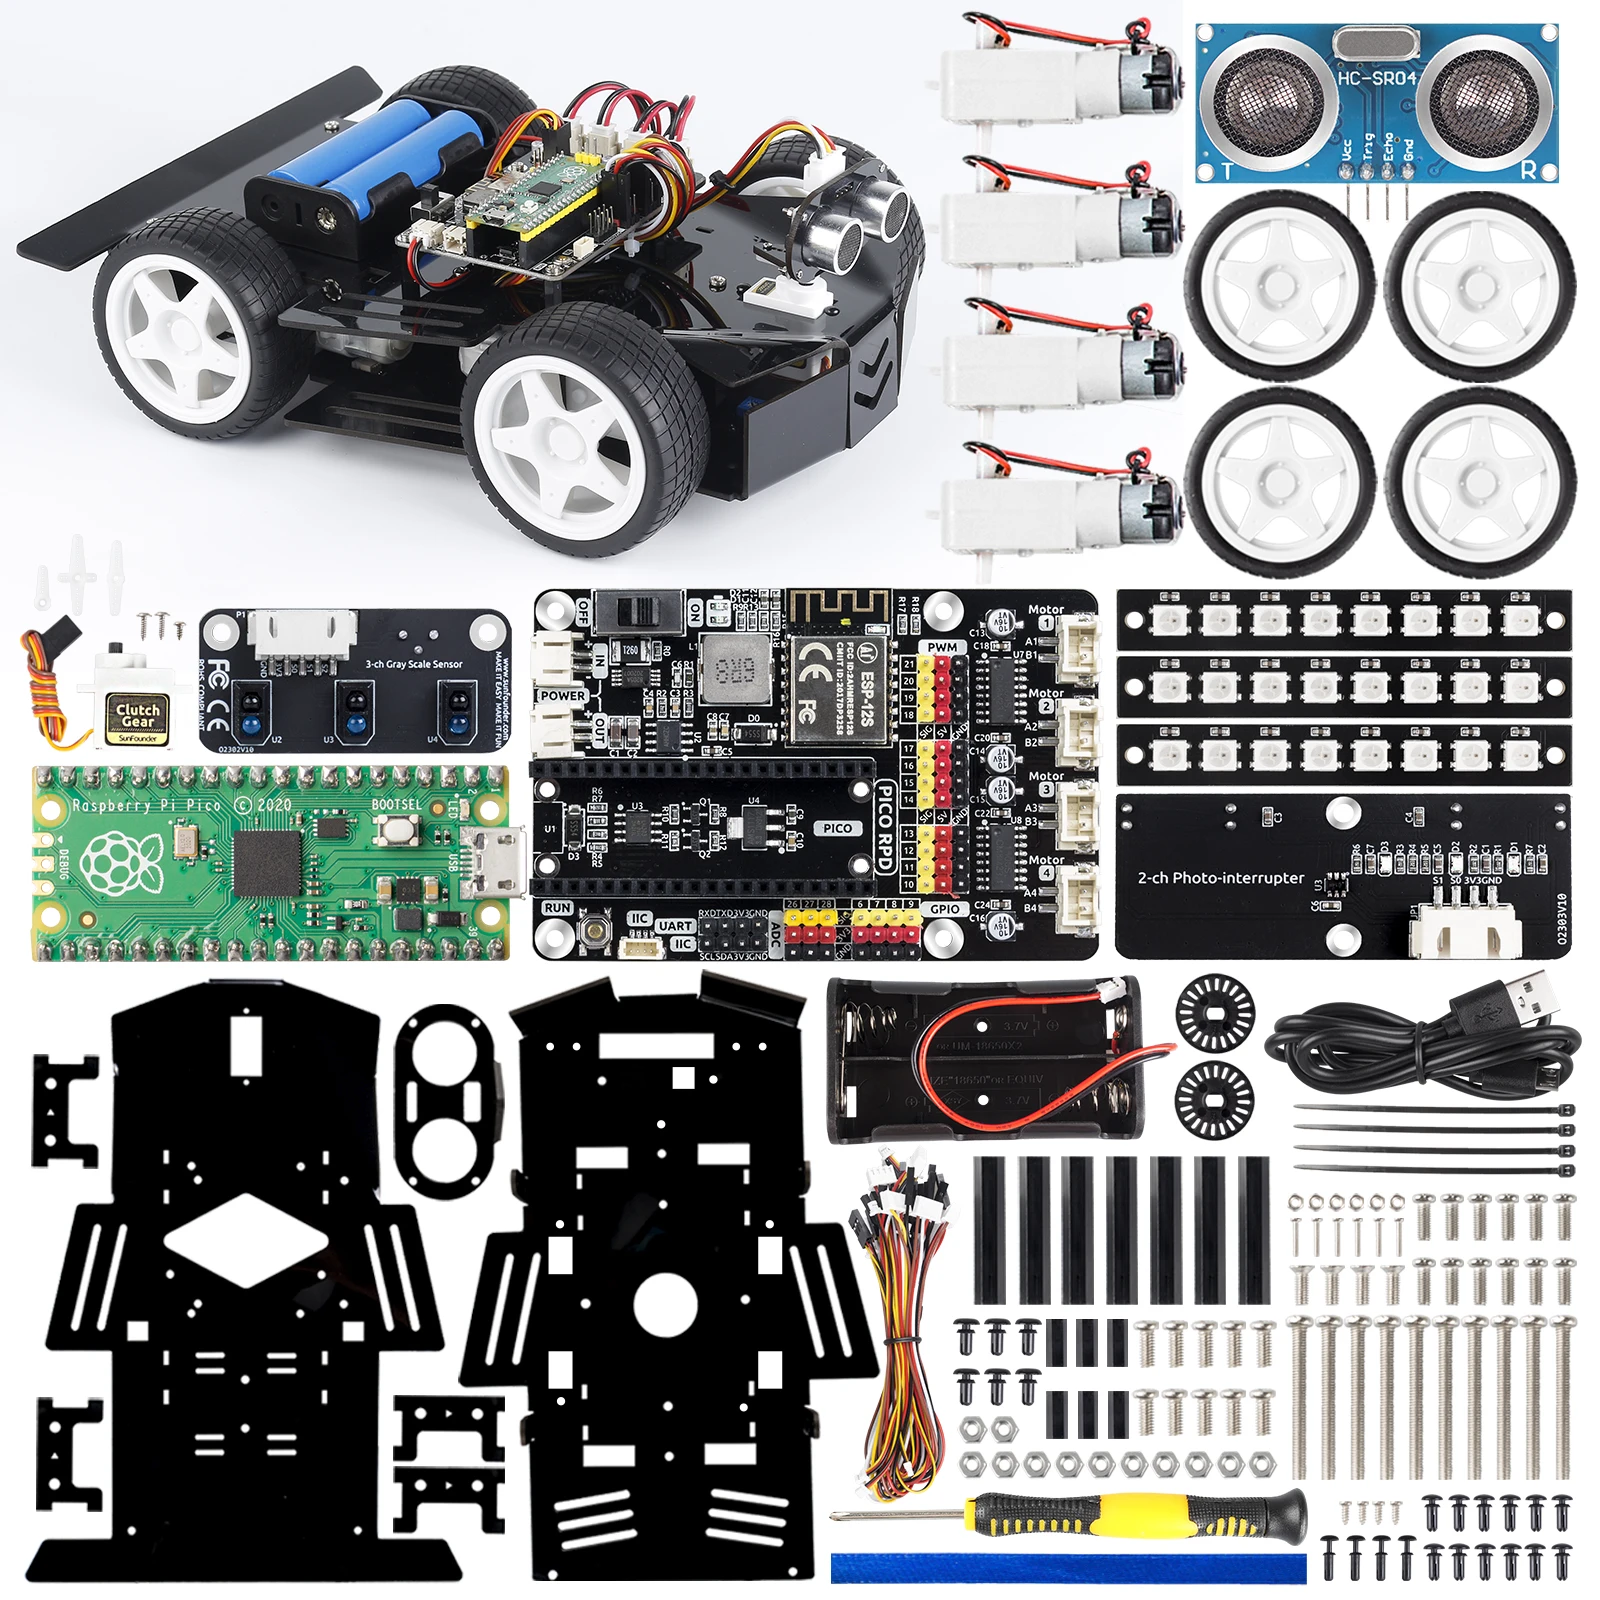 

SUNFOUNDER Raspberry Pi Pico Robot Car Kit, Open Source, MicroPython, App Control